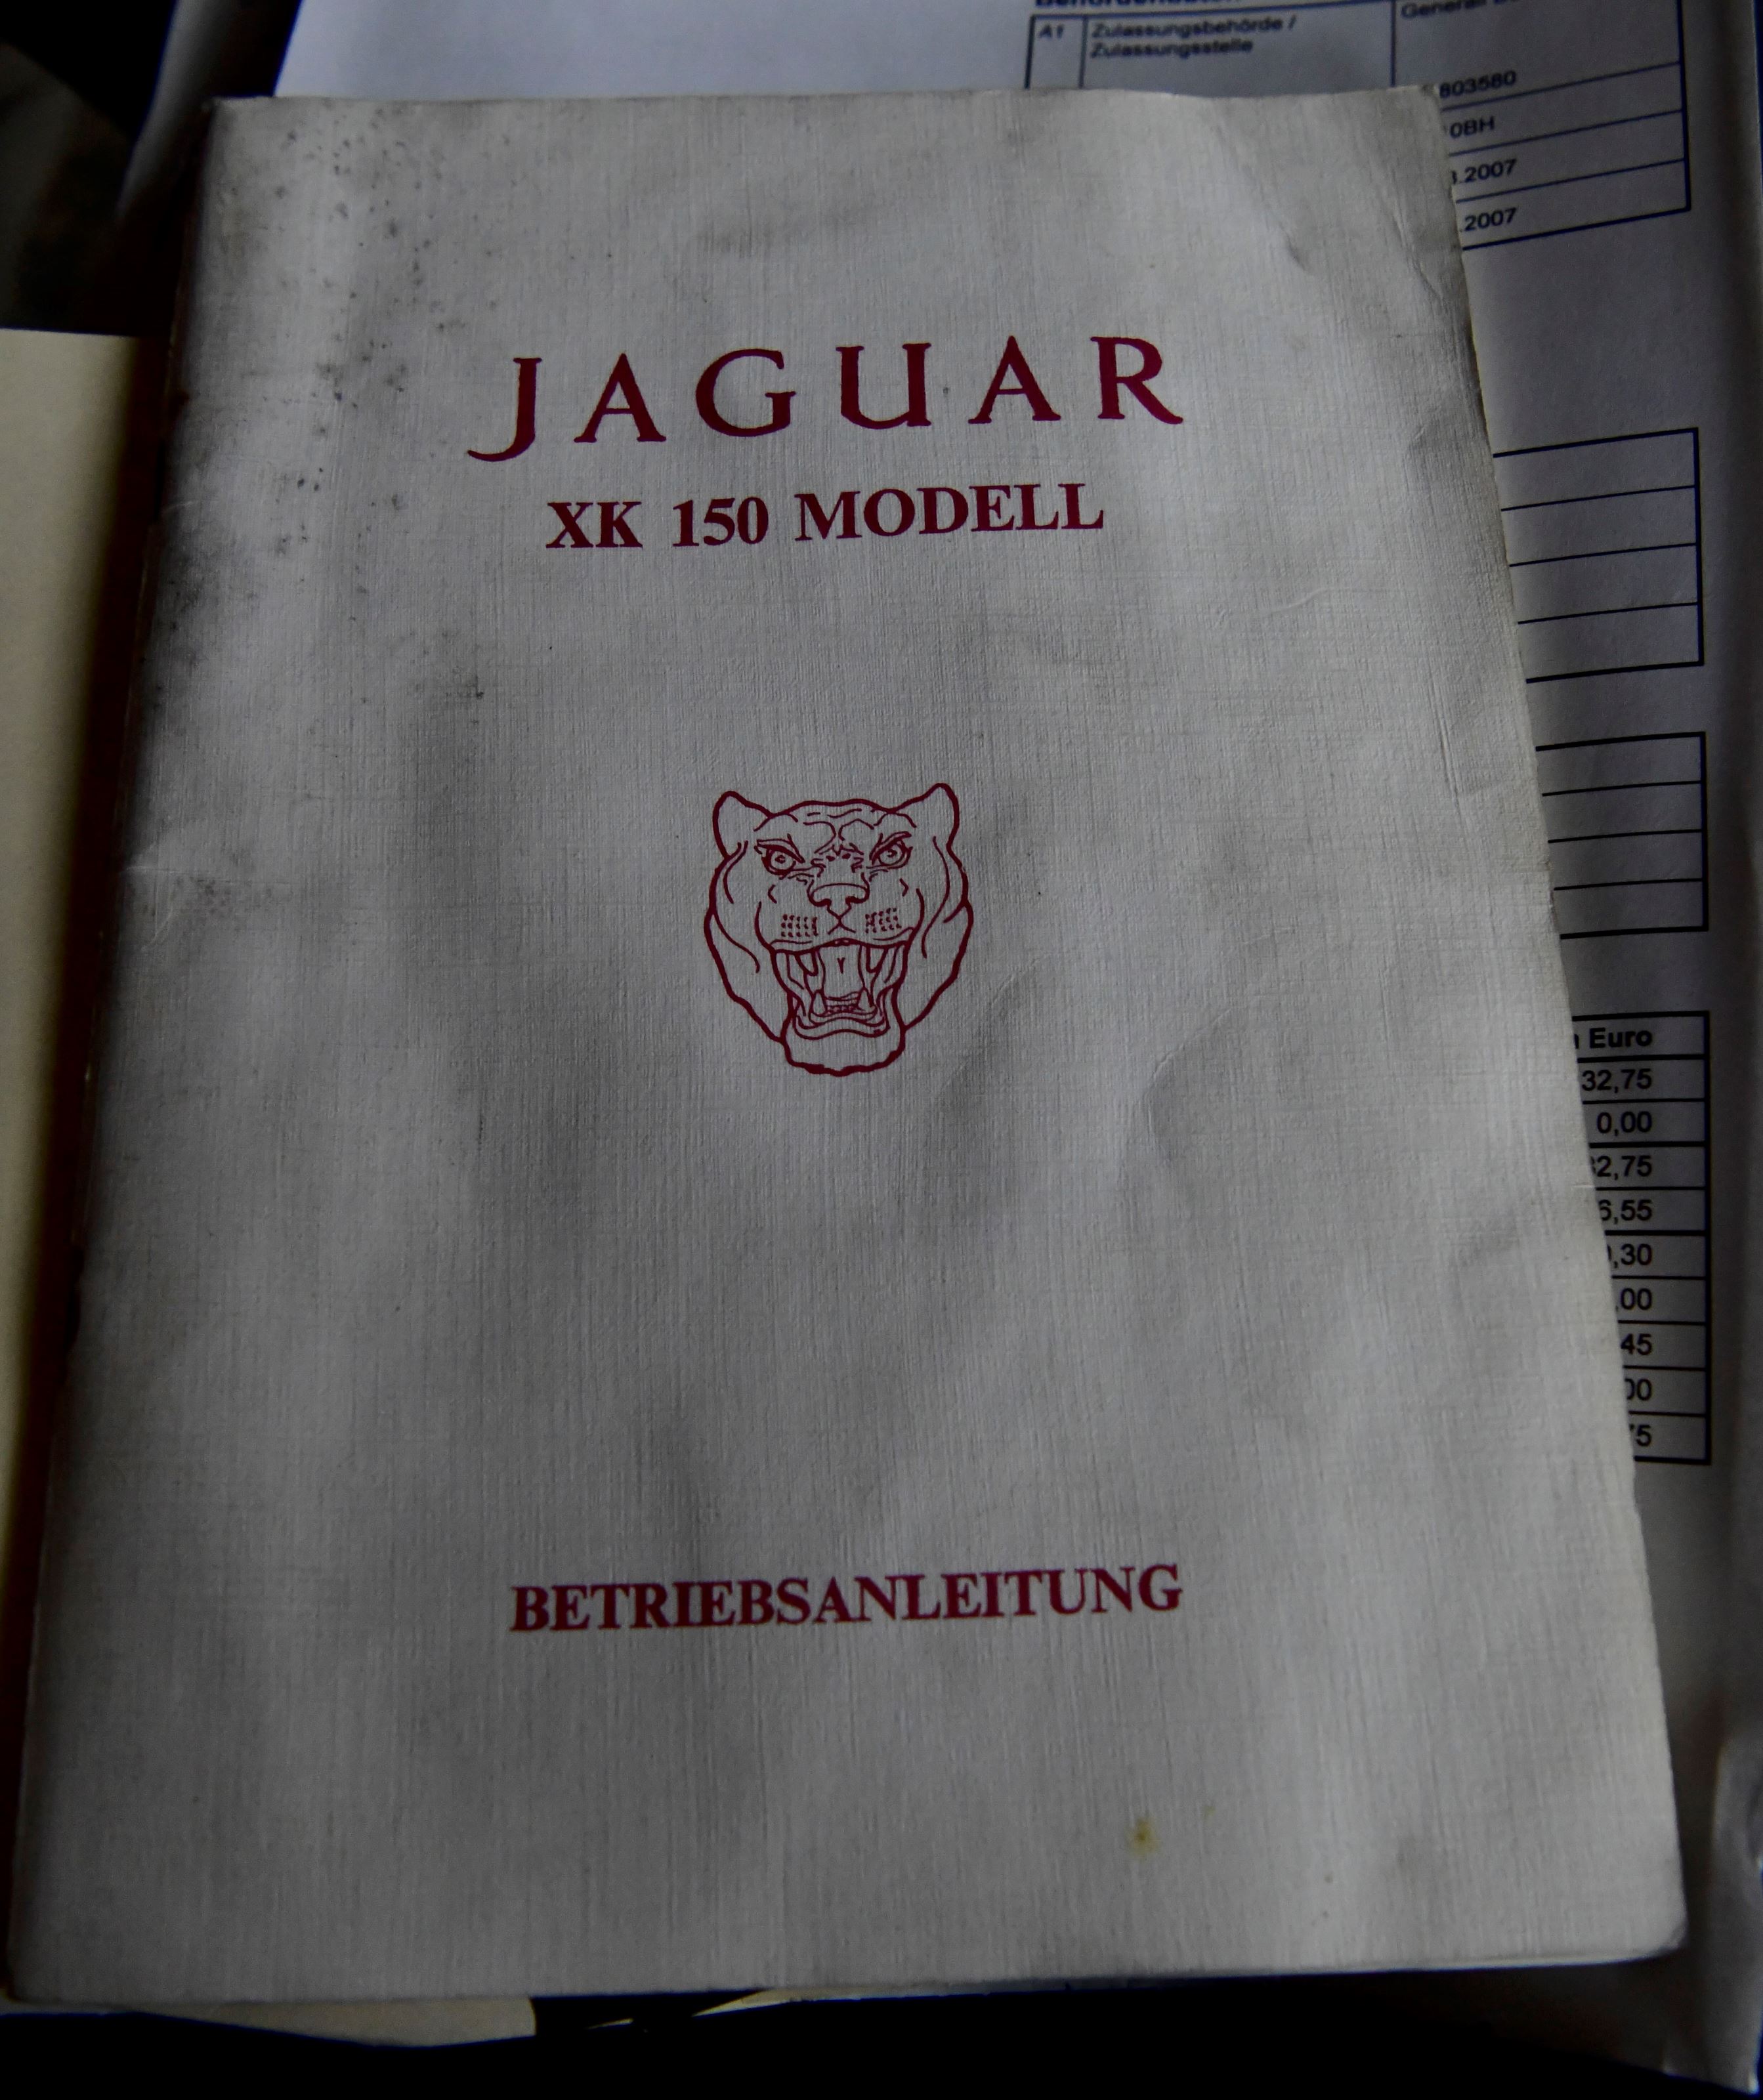 Jaguar xk150s ots lhd with overdrive ipwmdfx5add09gldomtcx